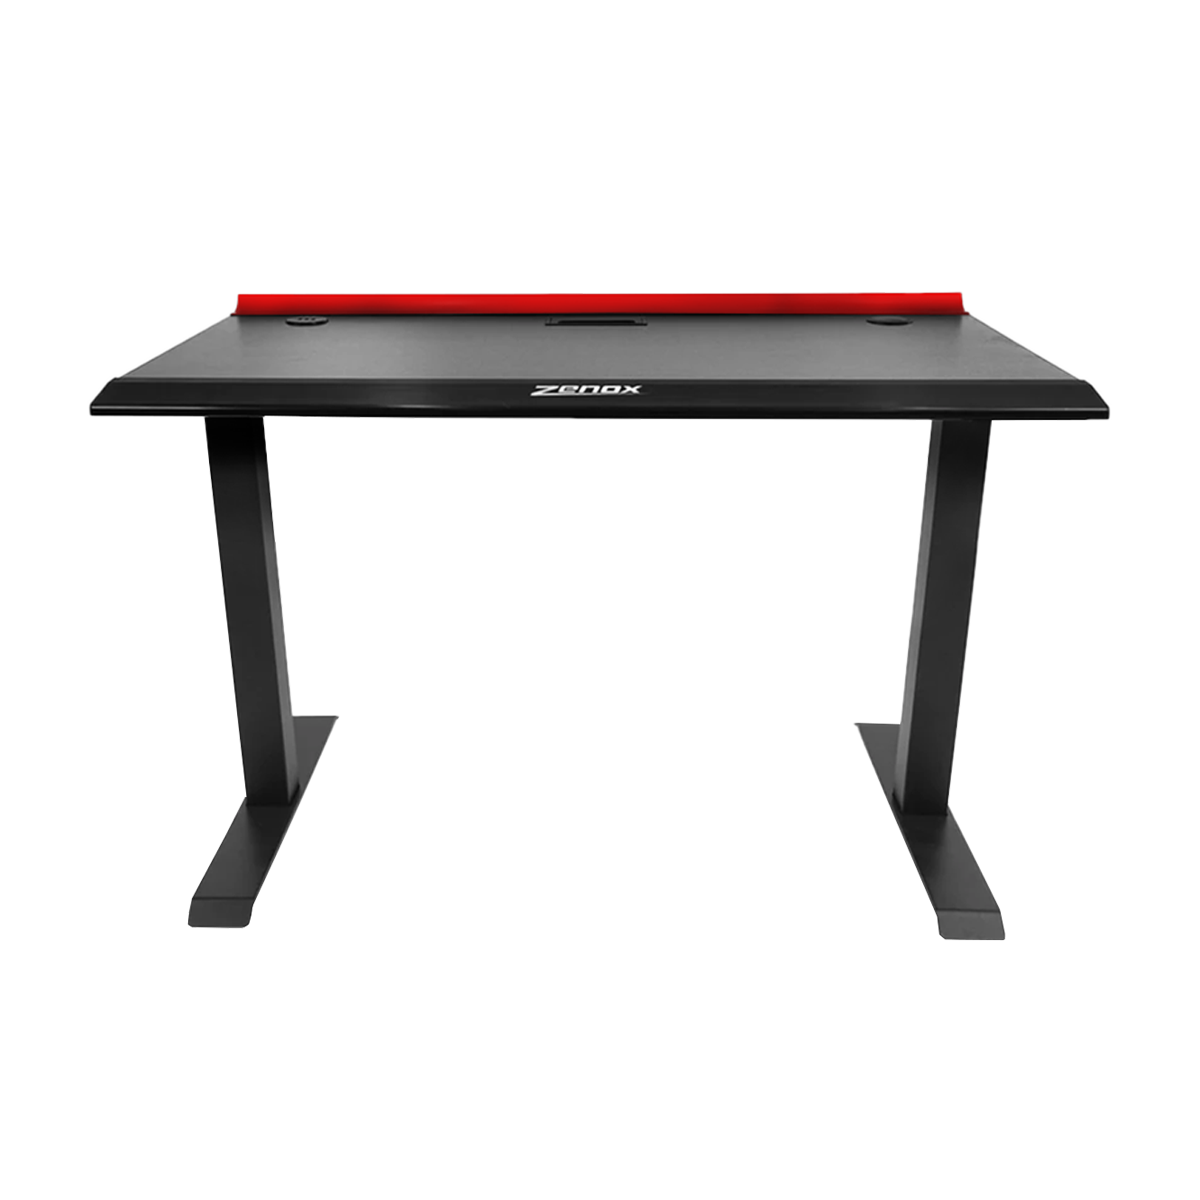 Zenox Artemis Gaming Desk 電競枱 (固定高度) - 1.5米 (Red 紅色)